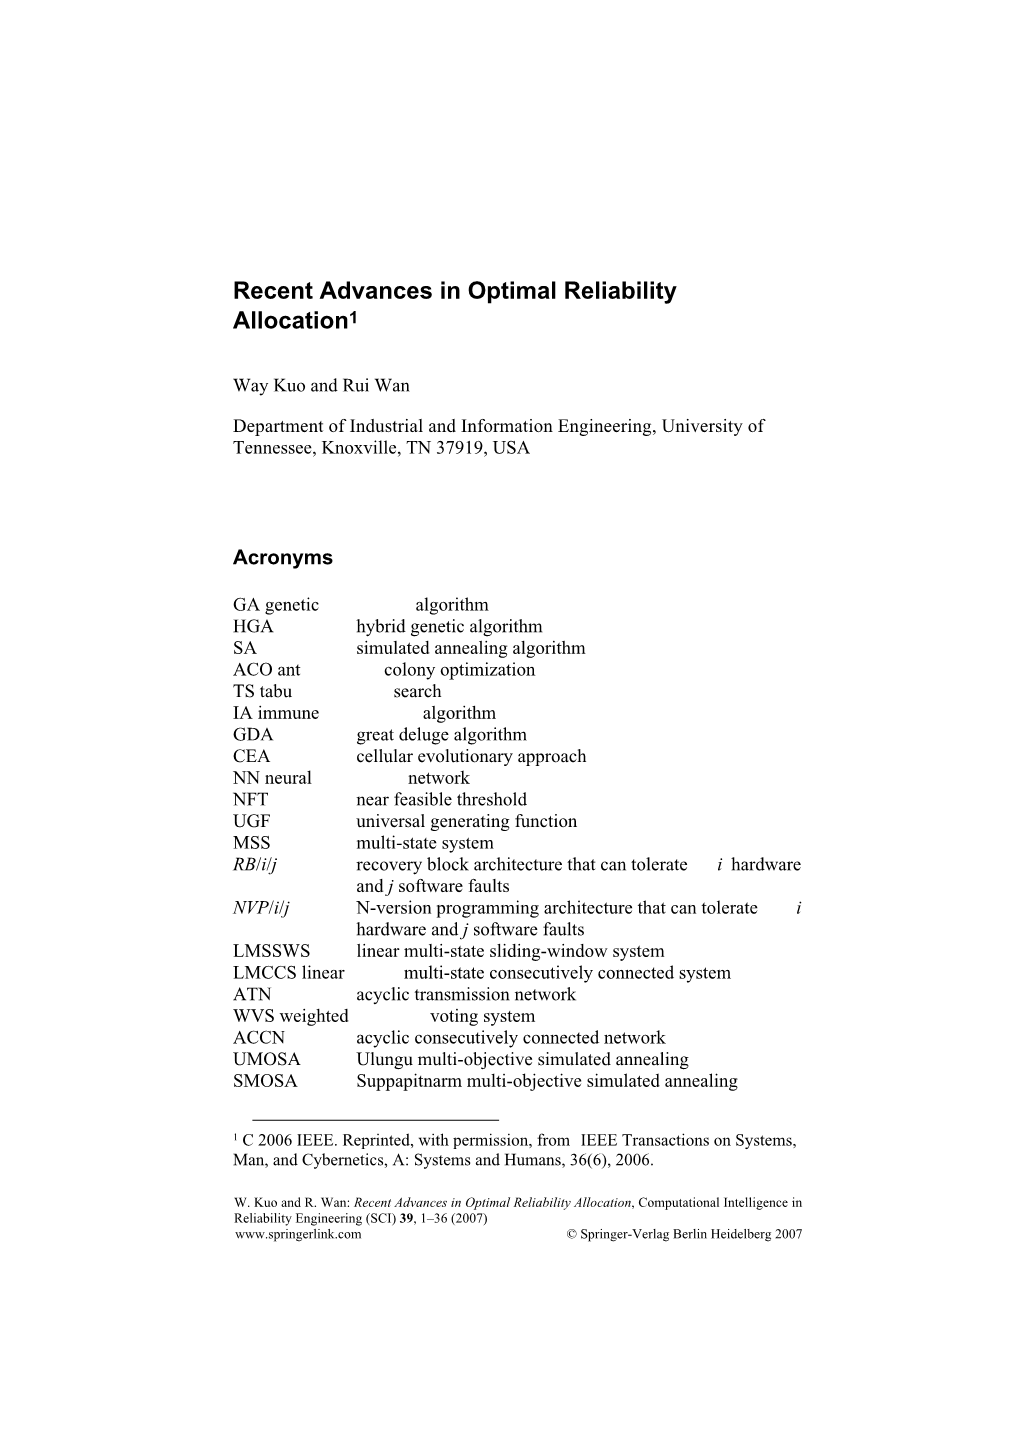 Recent Advances in Optimal Reliability Allocation1